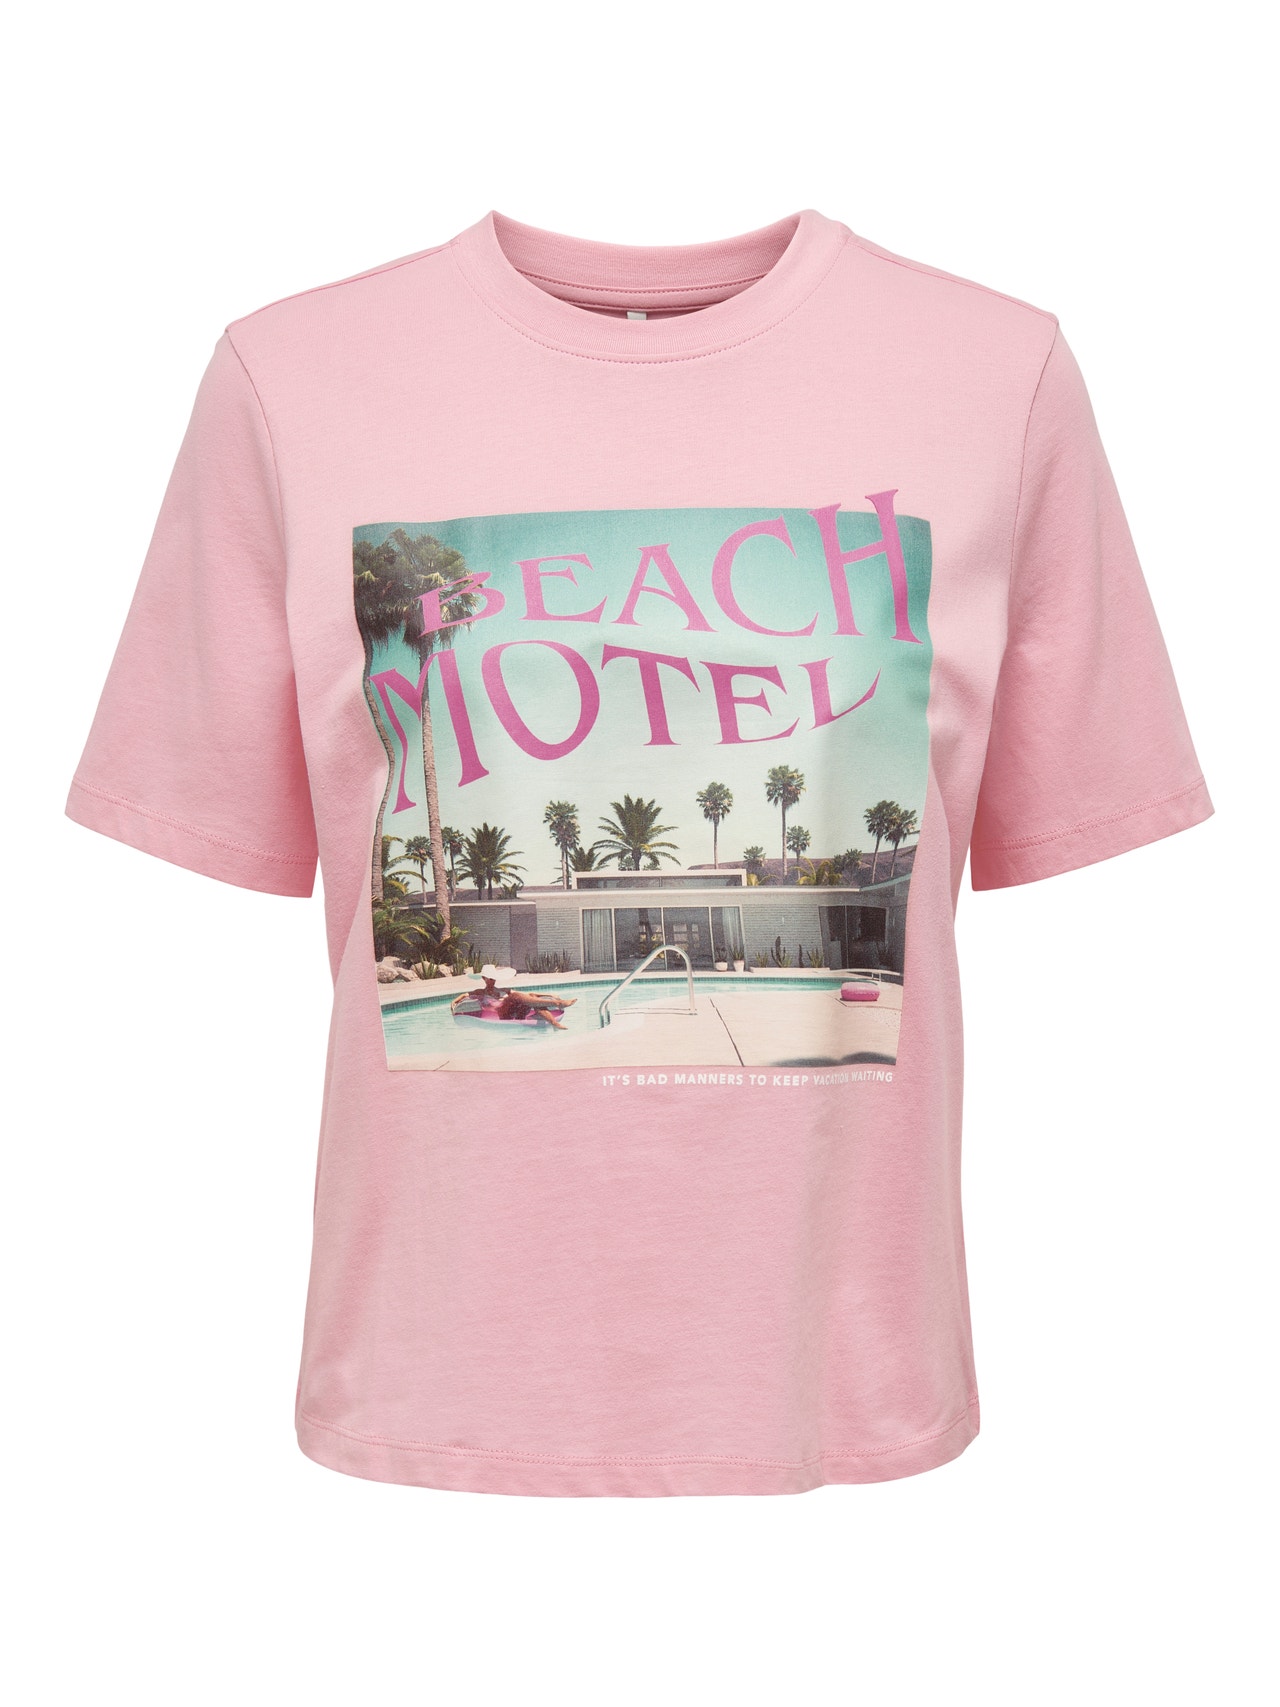 ONLY Camisetas Corte regular Cuello redondo -Candy Pink - 15295382